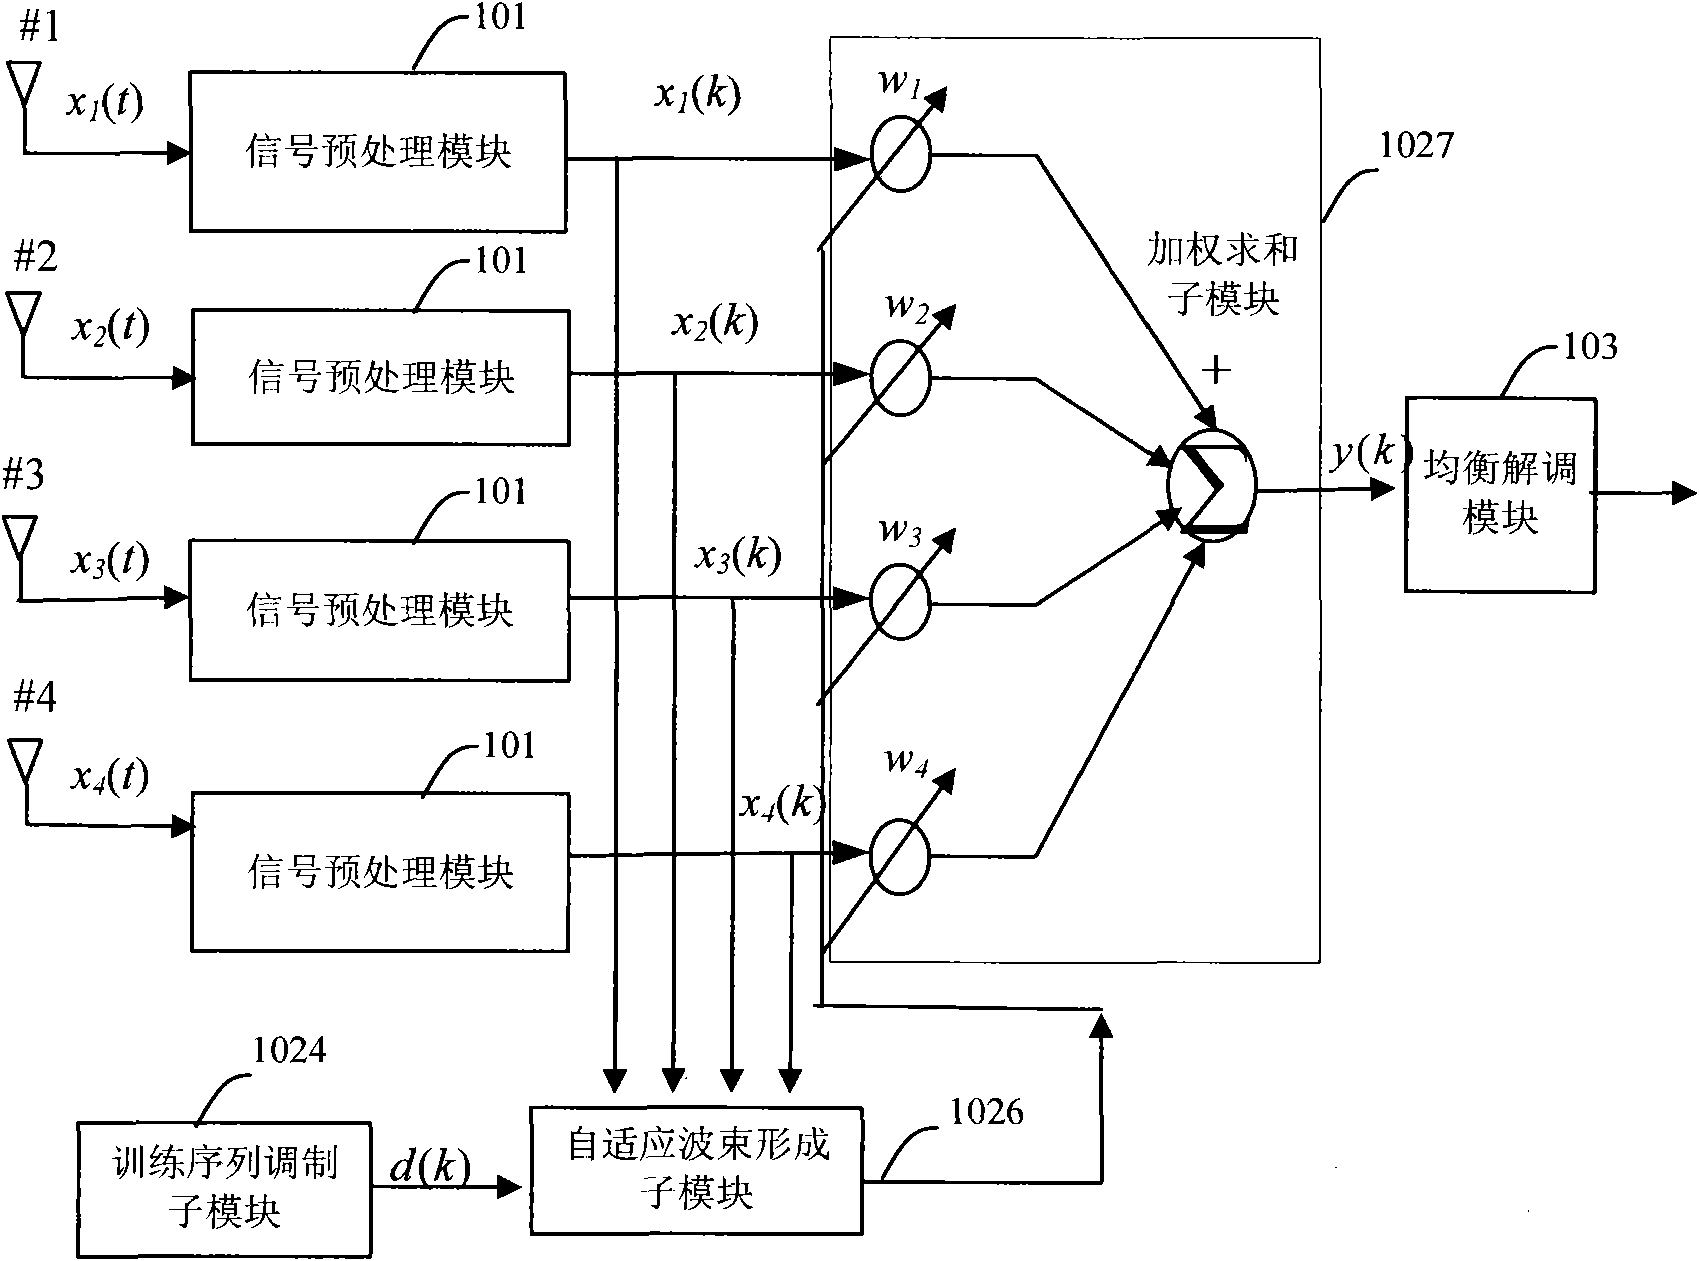 Self-adaptive beam forming method and self-adaptive beam forming device